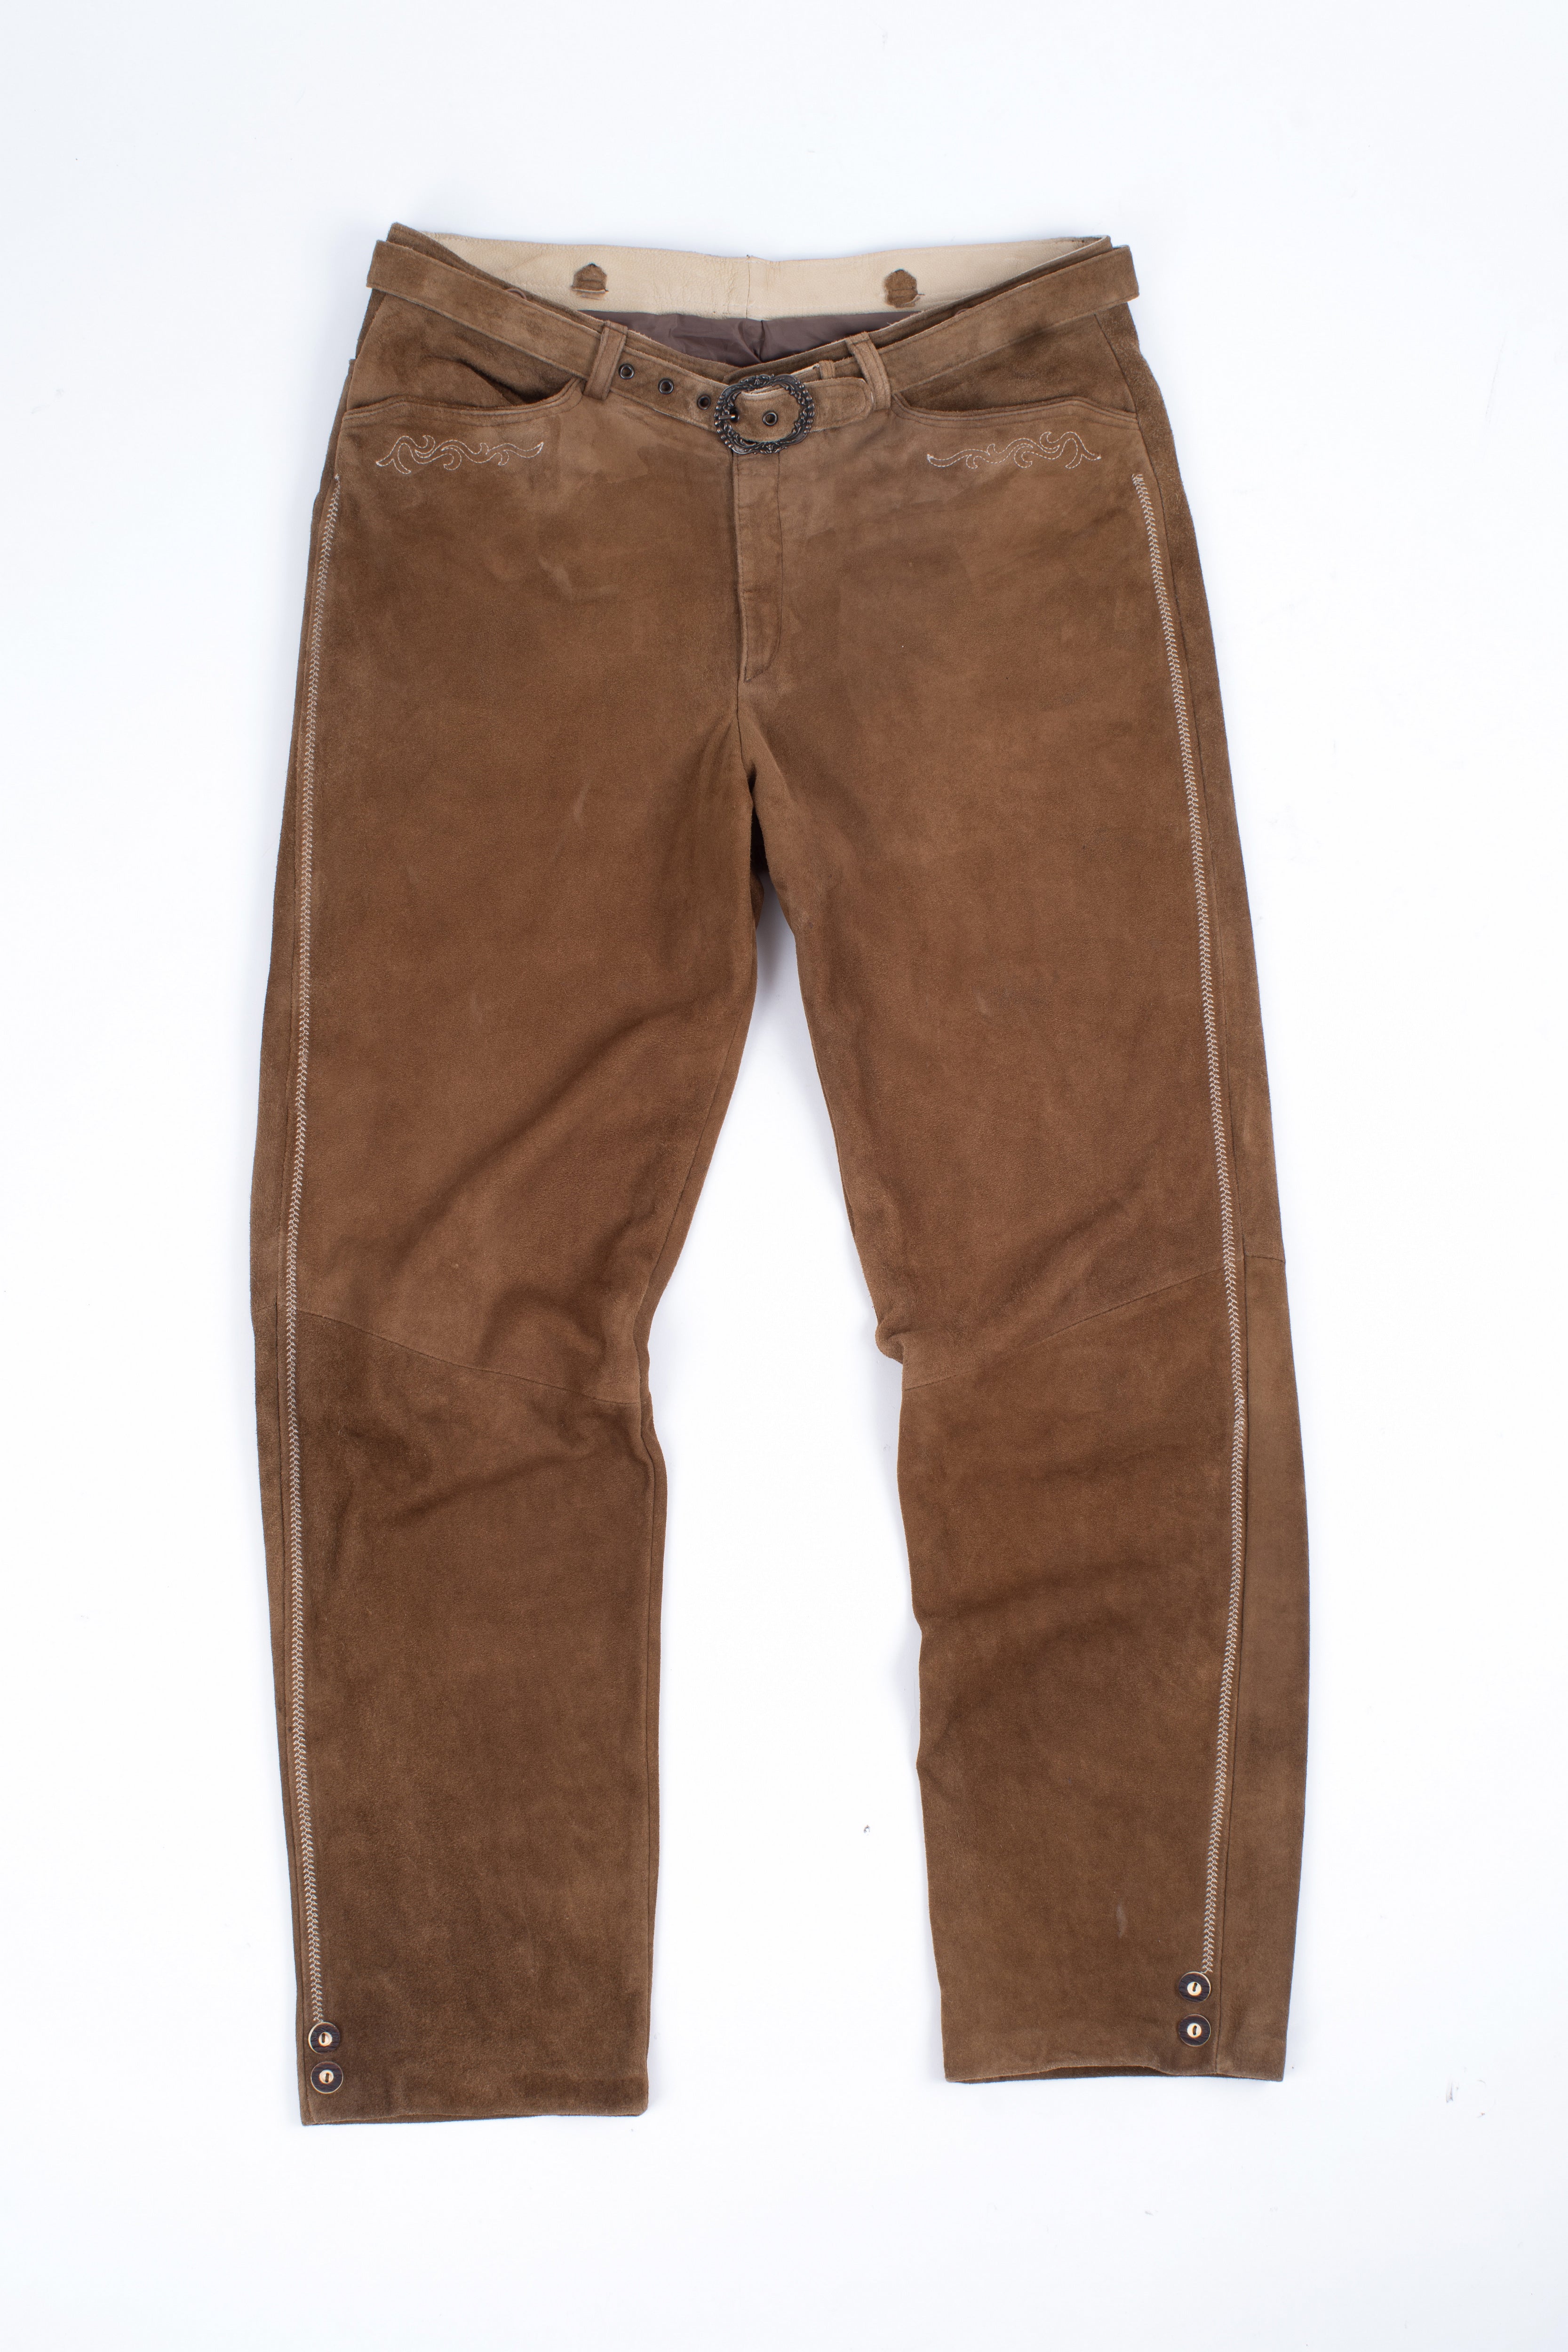 Vintage Tyrolean Lederhosen Long Leather Tracht Pants, Size XL